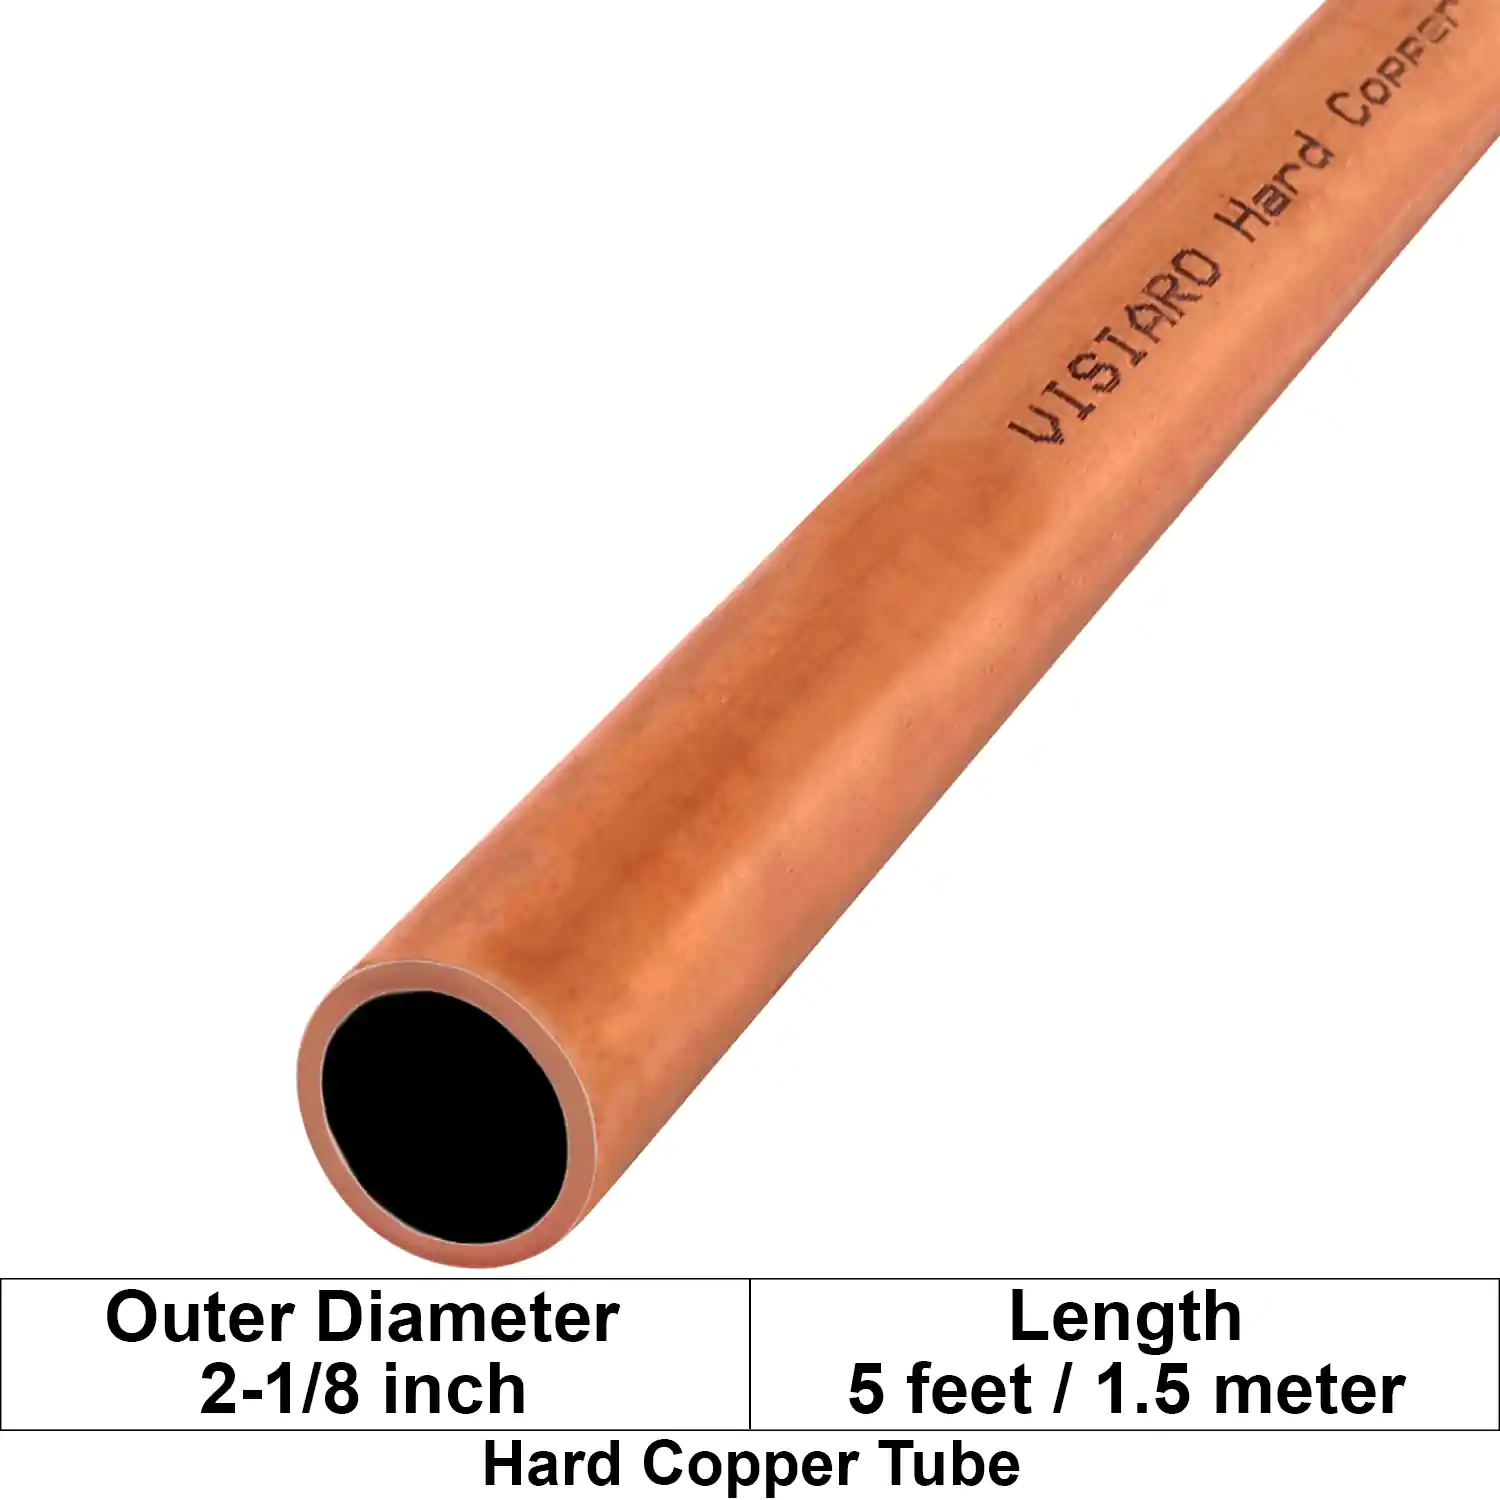 Visiaro Hard Copper Tube 5 feet long Outer Diameter - 2-1/8 inch